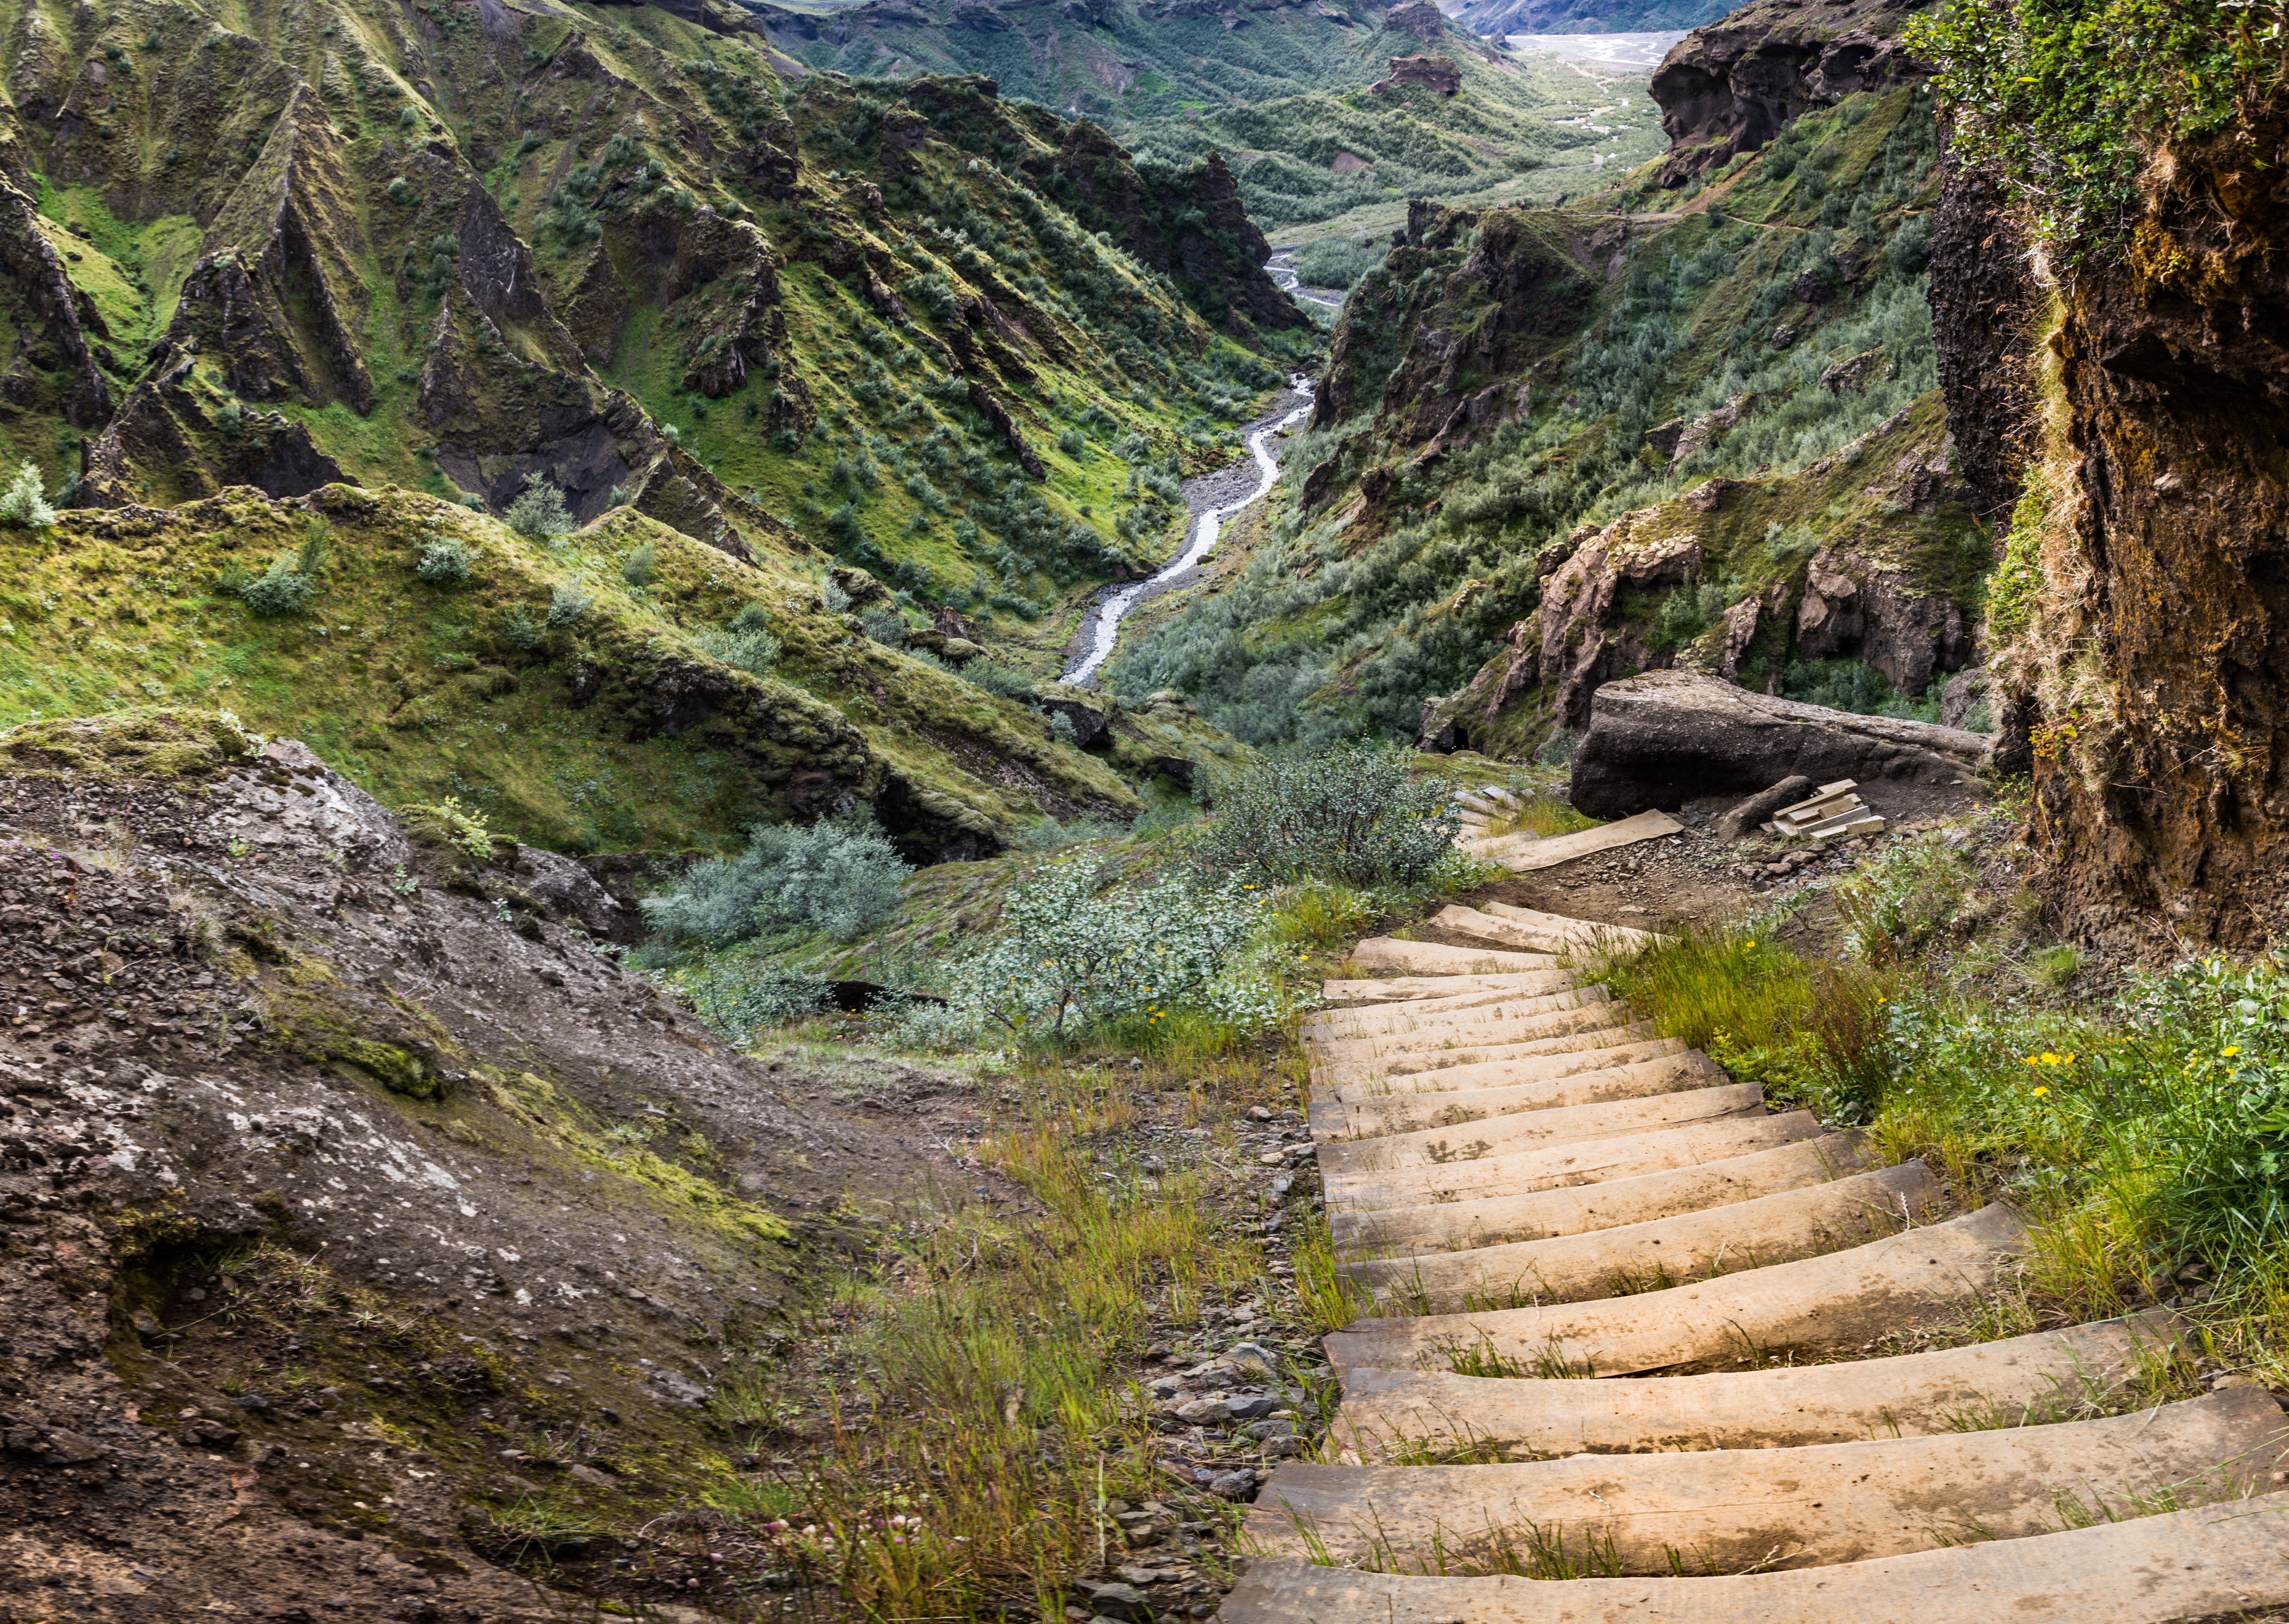 The Fimmvörðuháls trail